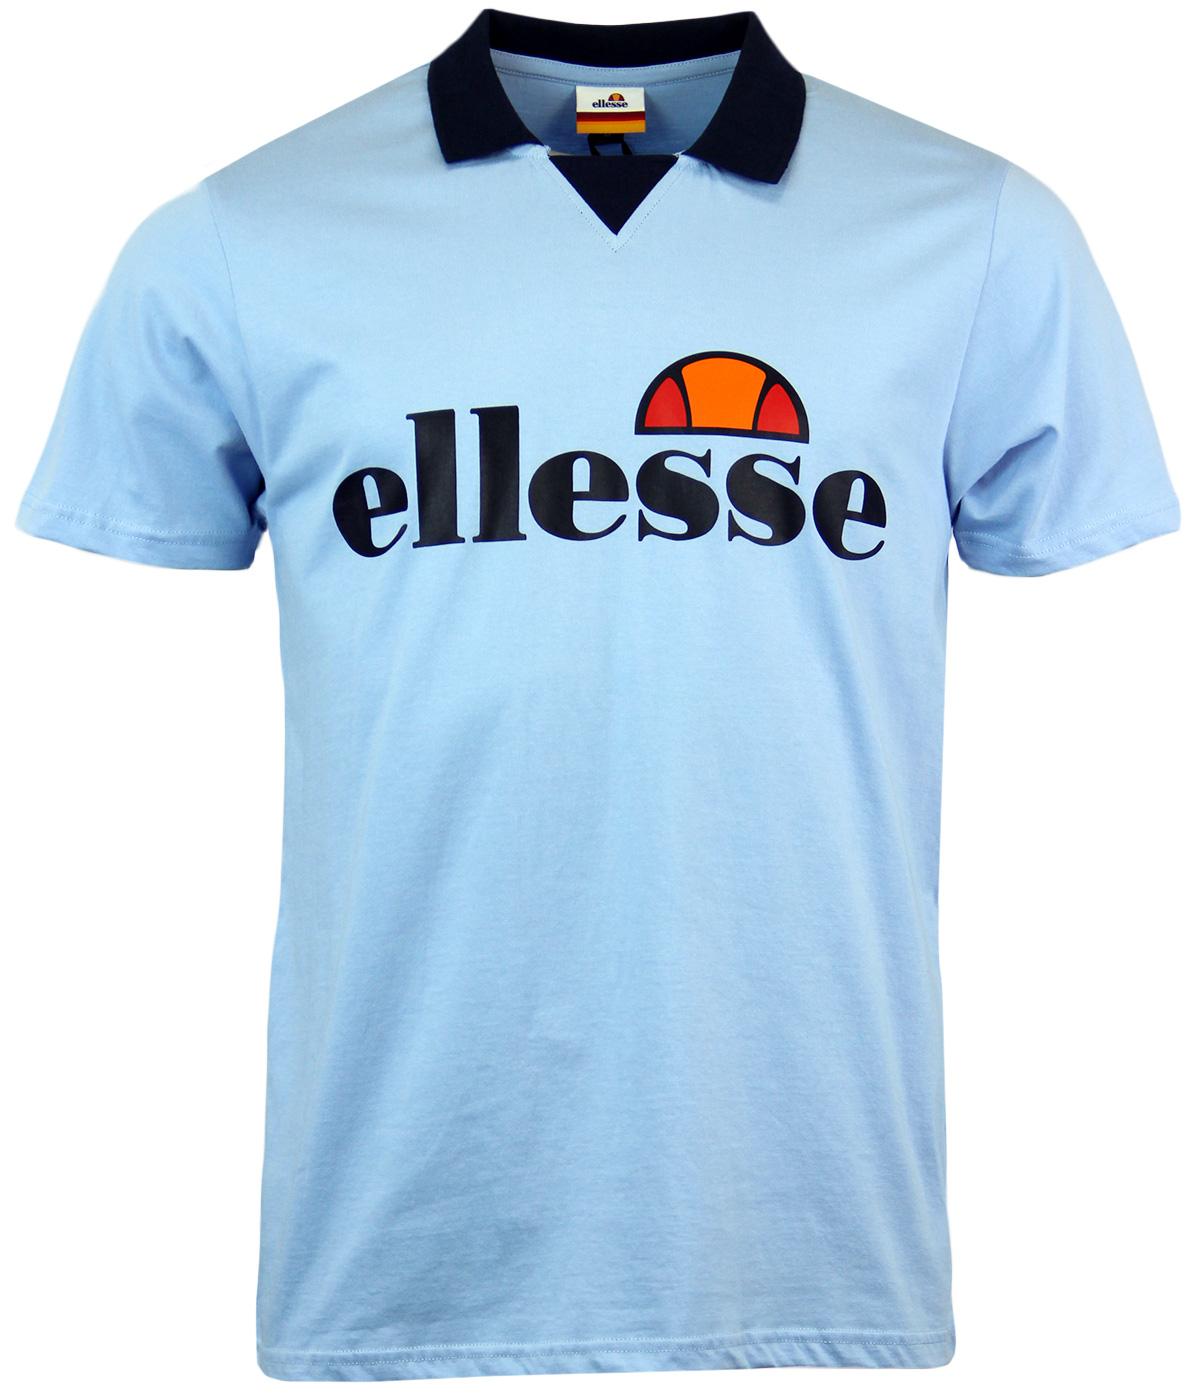 Sarzana ELLESSE Retro Seventies Football T-Shirt